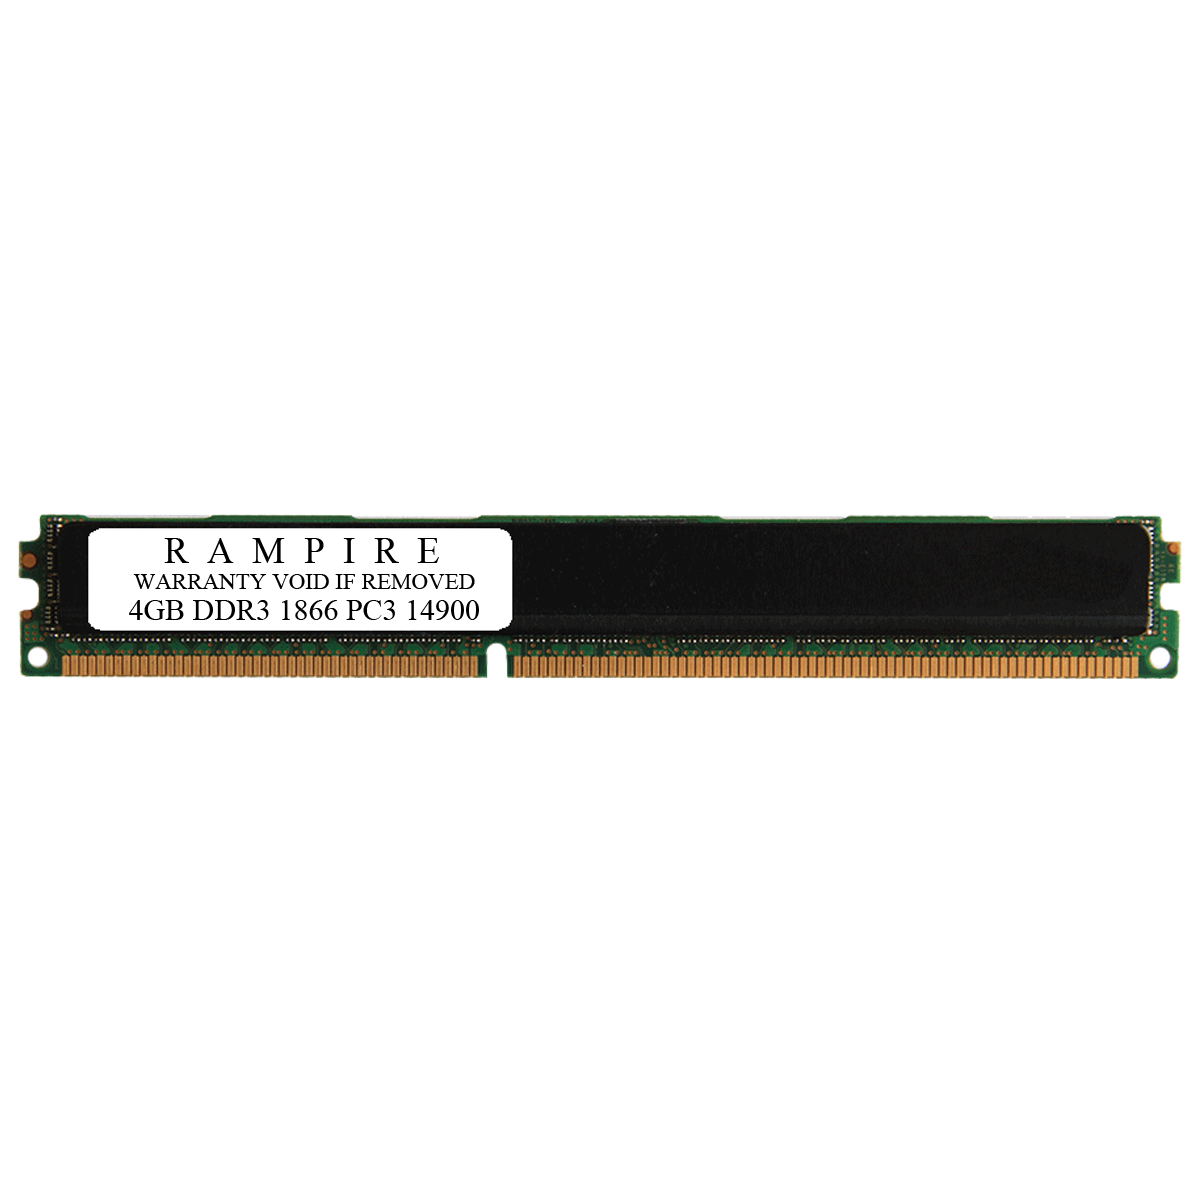 RAMPIRE 4GB DDR3 1866 (PC3 14900) 240-Pin SDRAM 1Rx4 VLP (Low Profile) 1.5V ECC Registered Server Memory